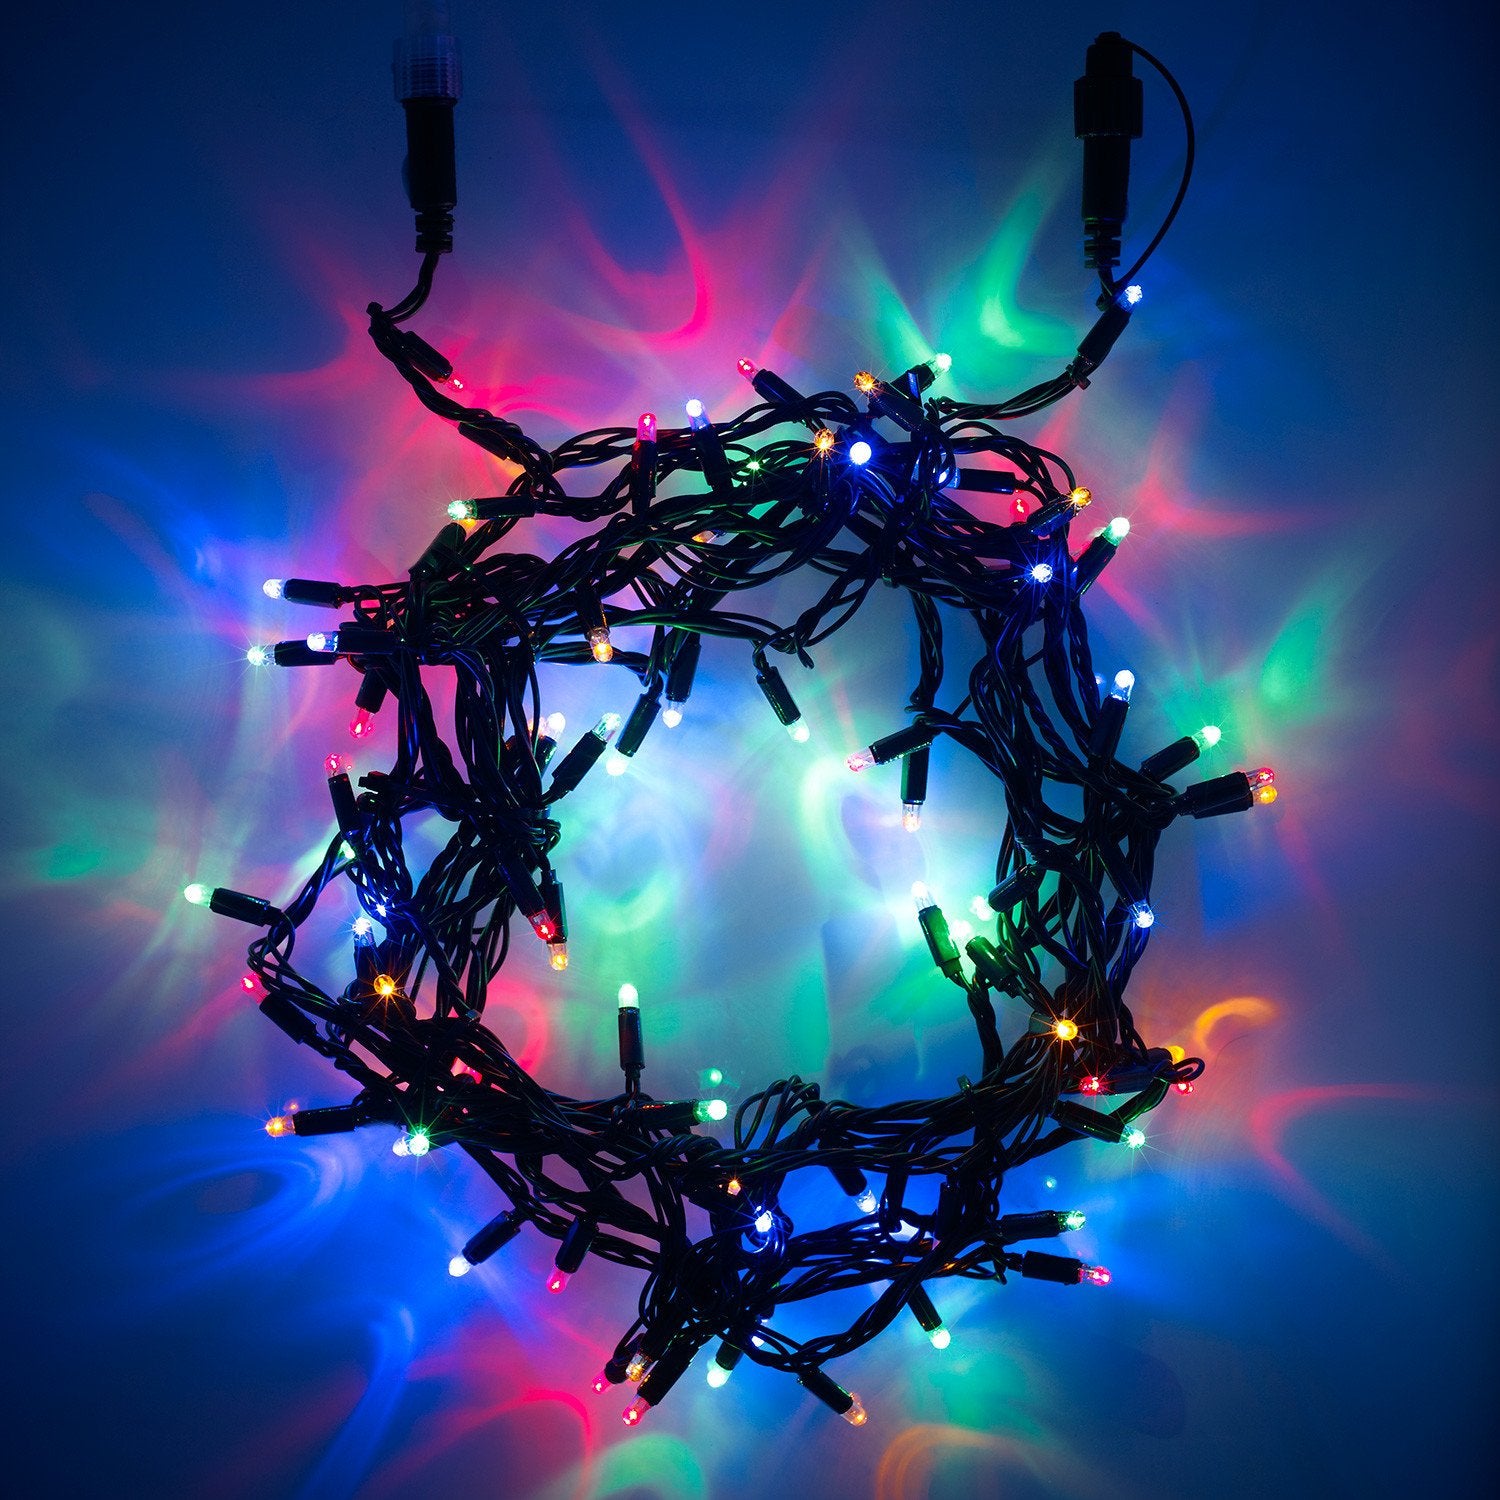 Guirlande lumineuse multicolore KNIRKE 40 LEDs